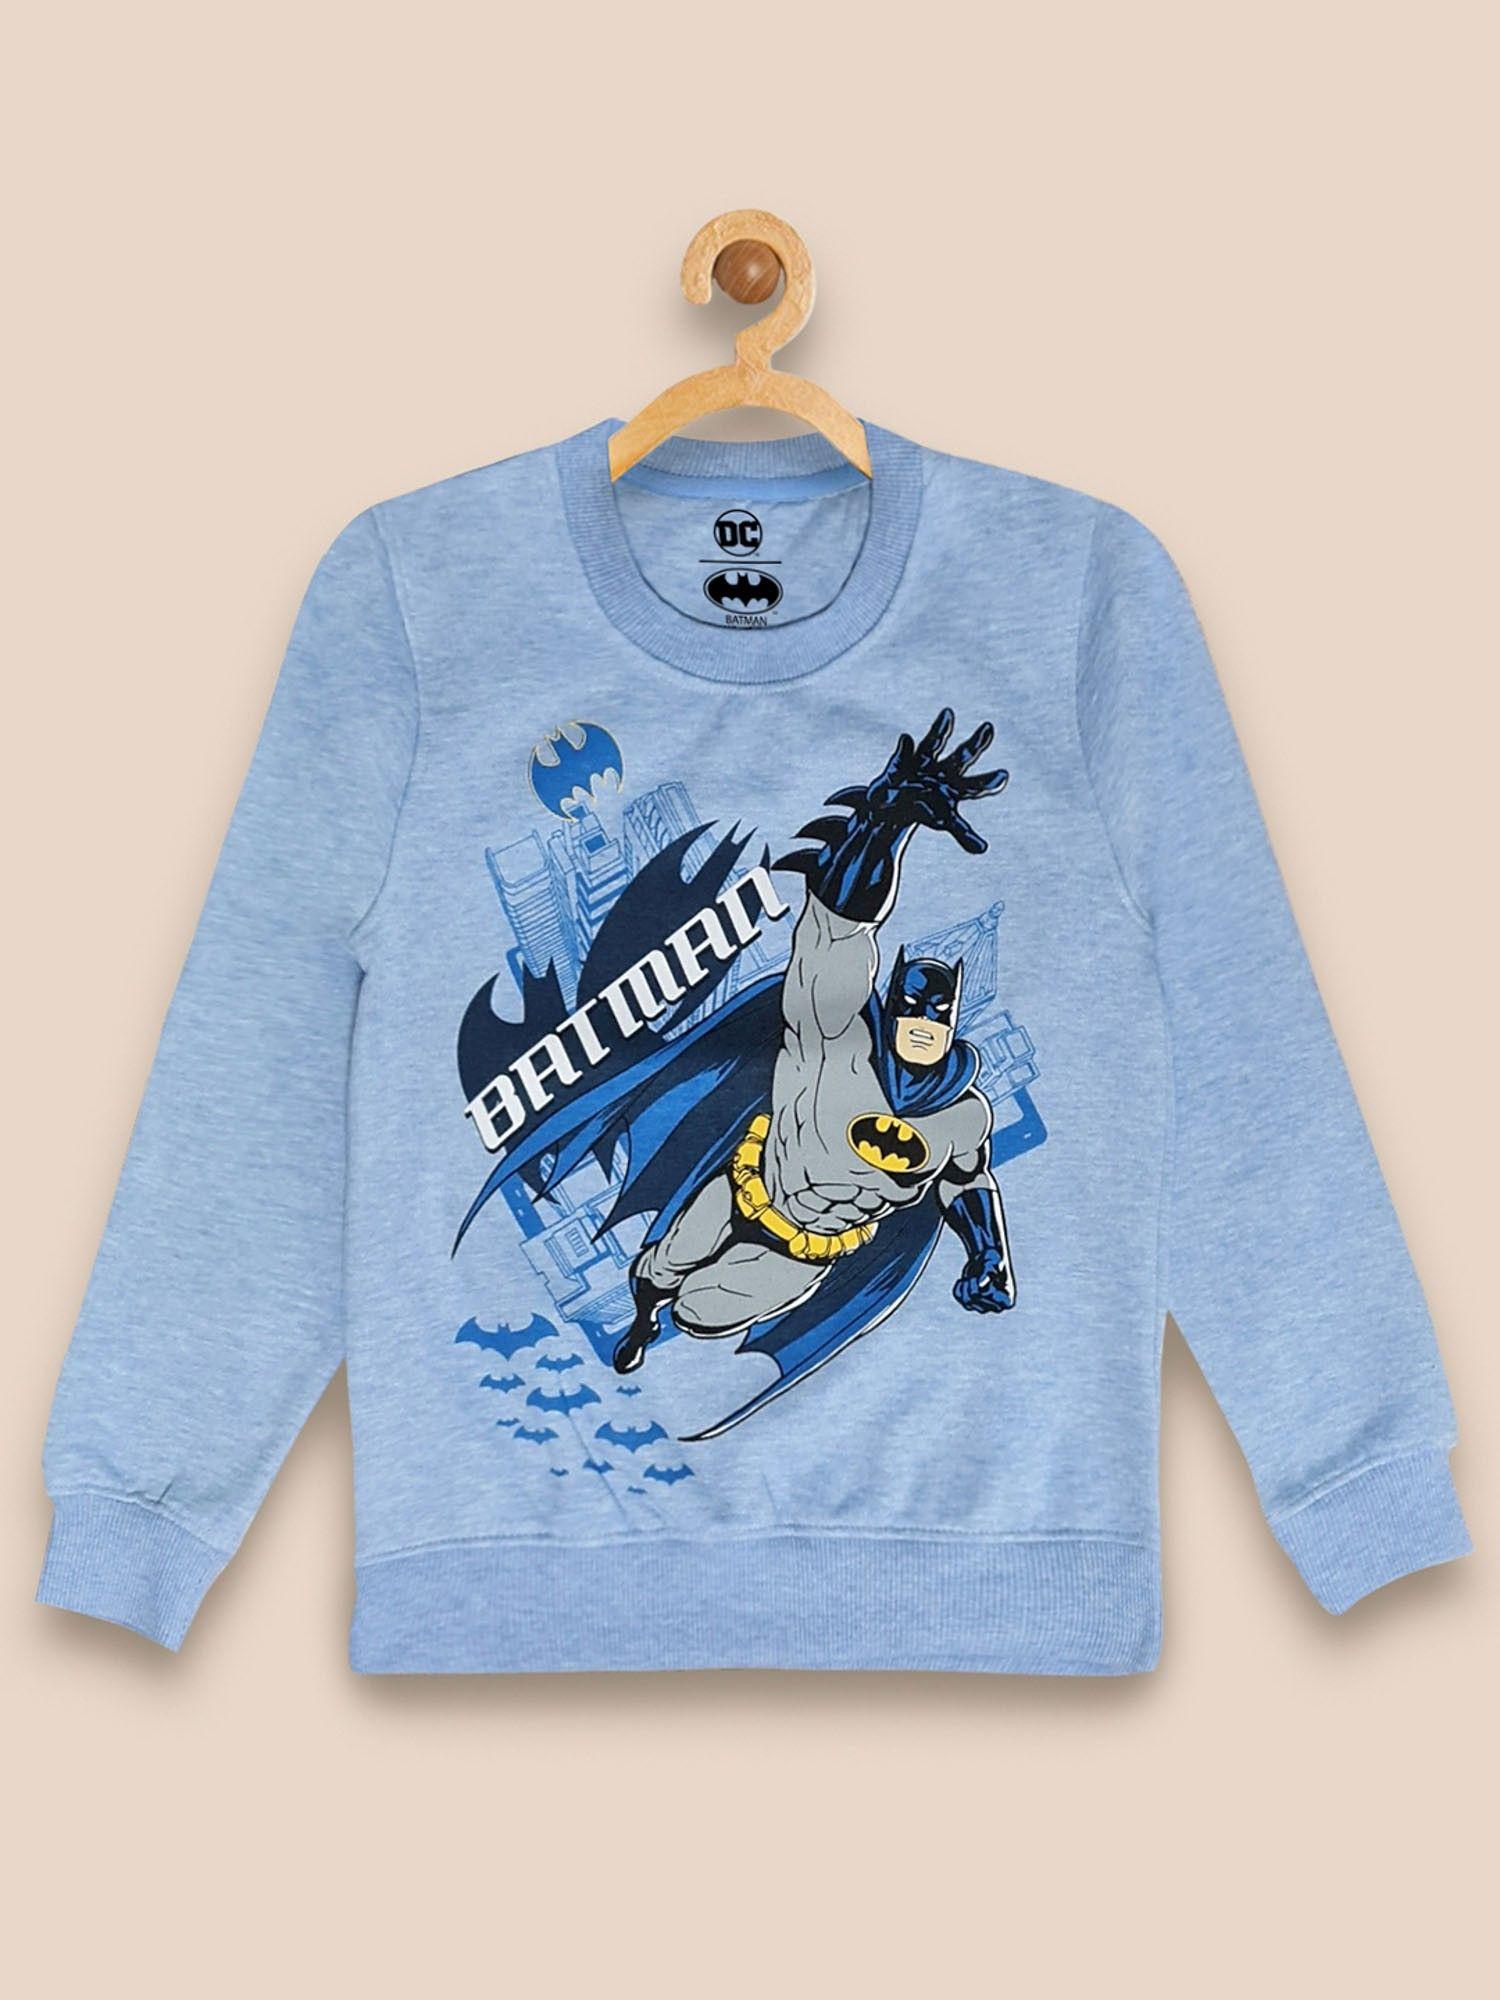 batman printed sweatshirt for kids boys